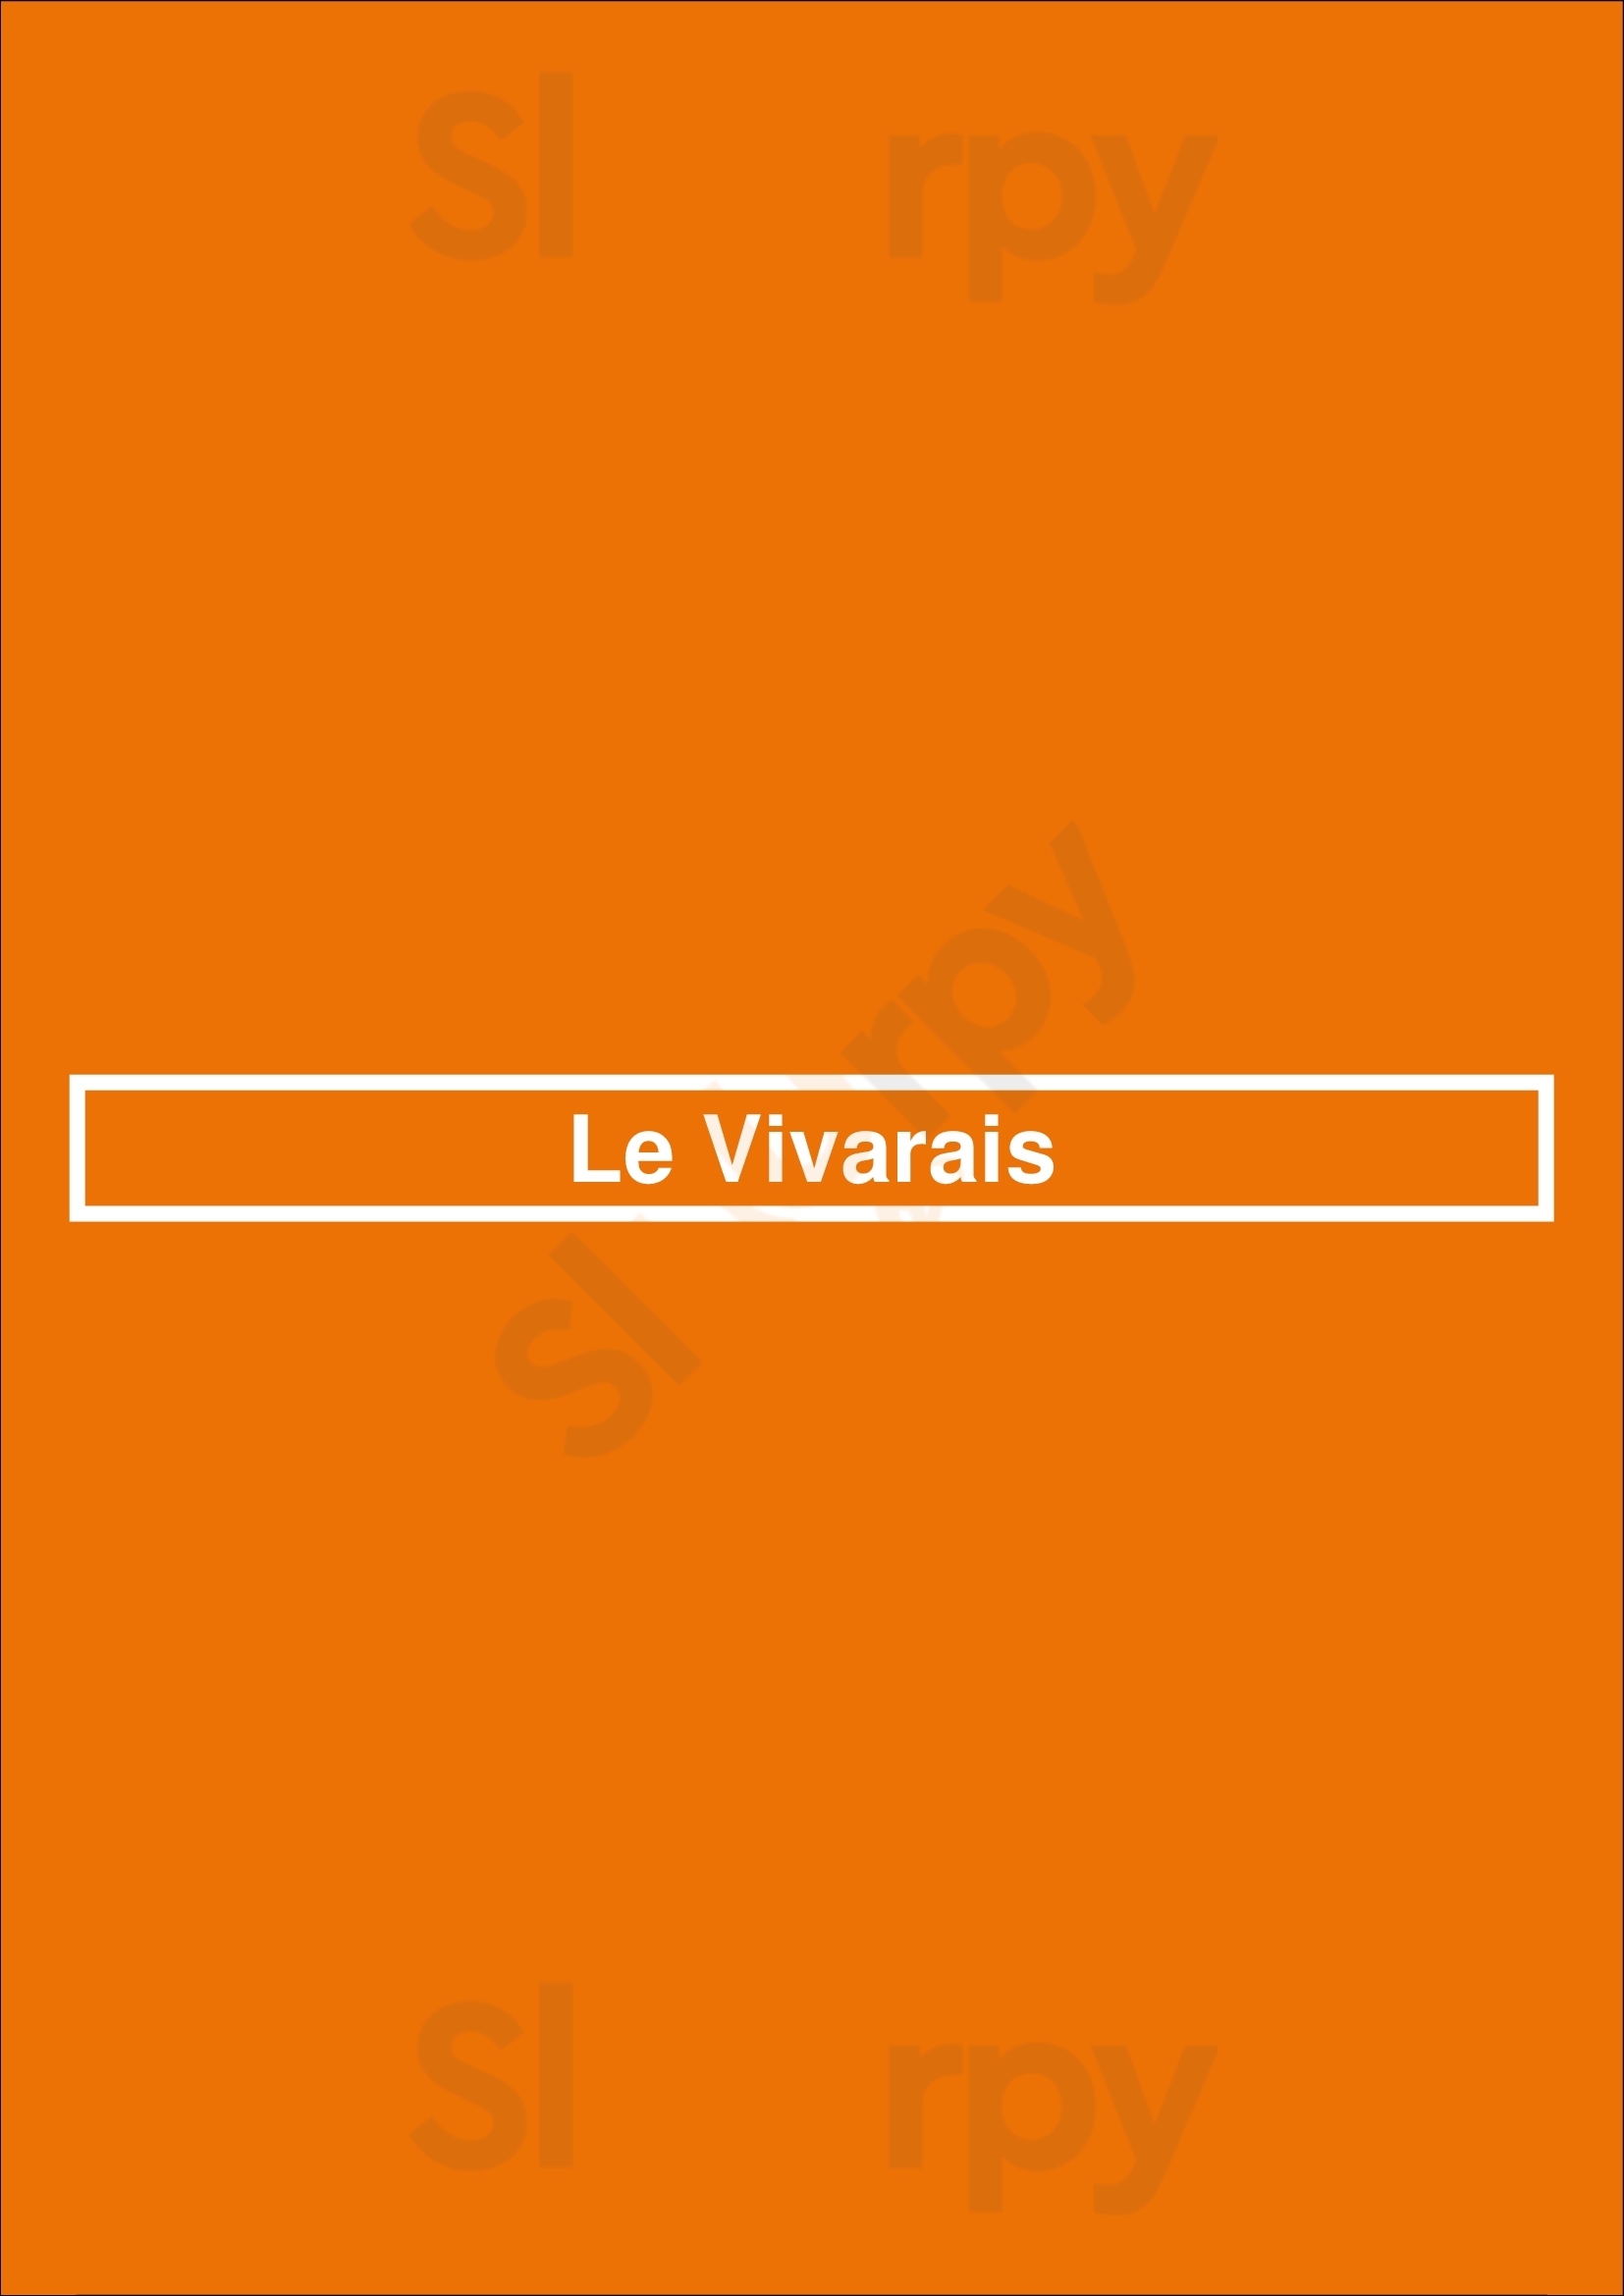 Le Vivarais Lyon Menu - 1